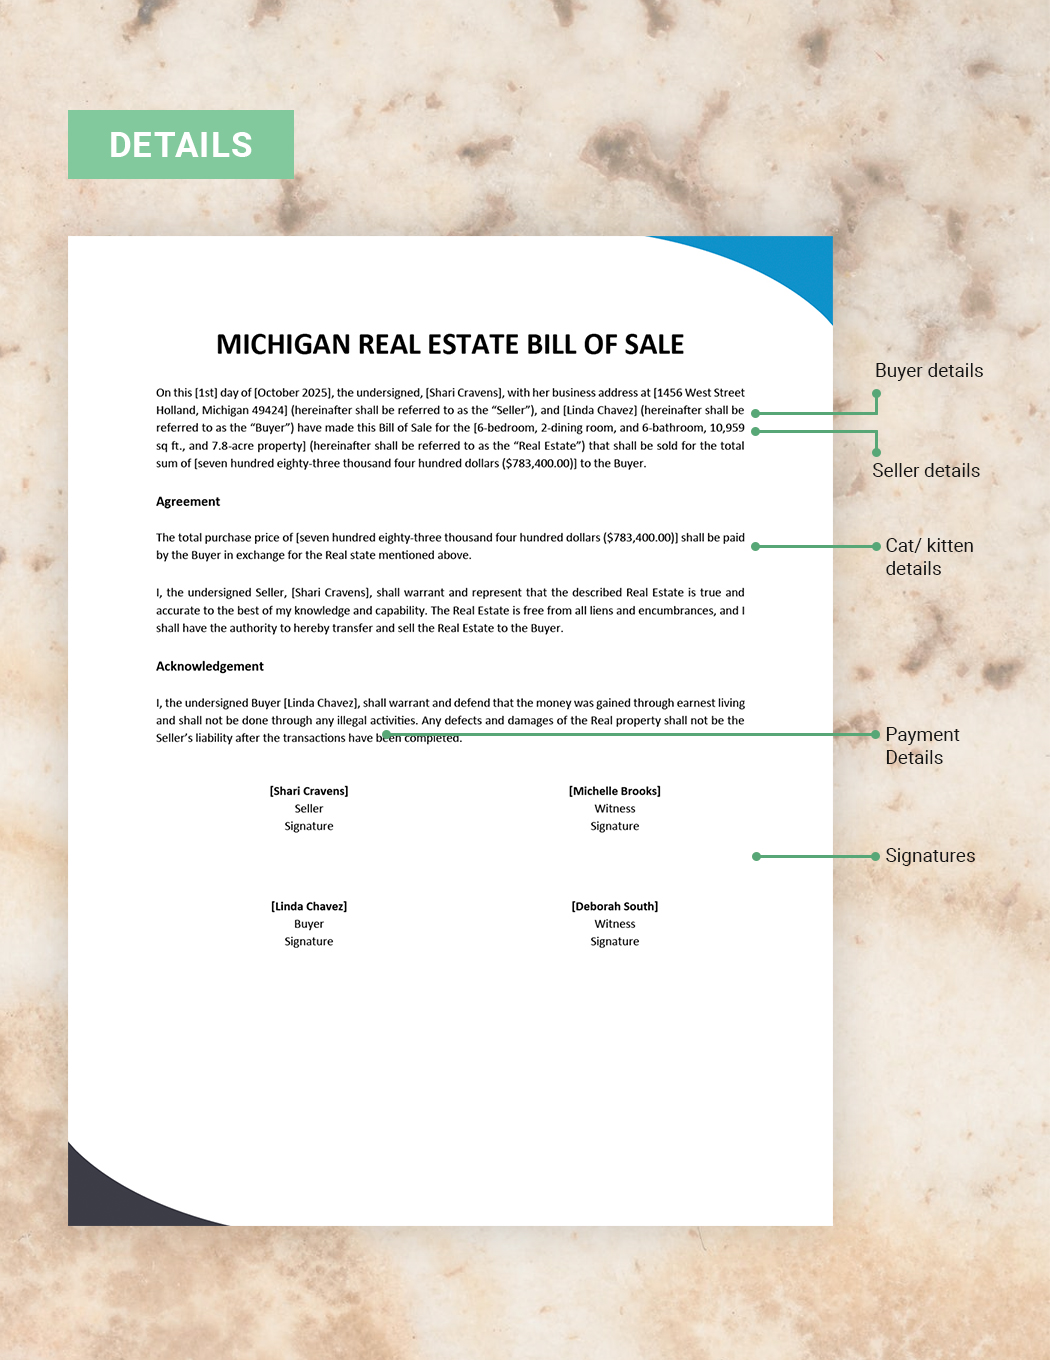 Michigan Real Estate Bill of Sale Template